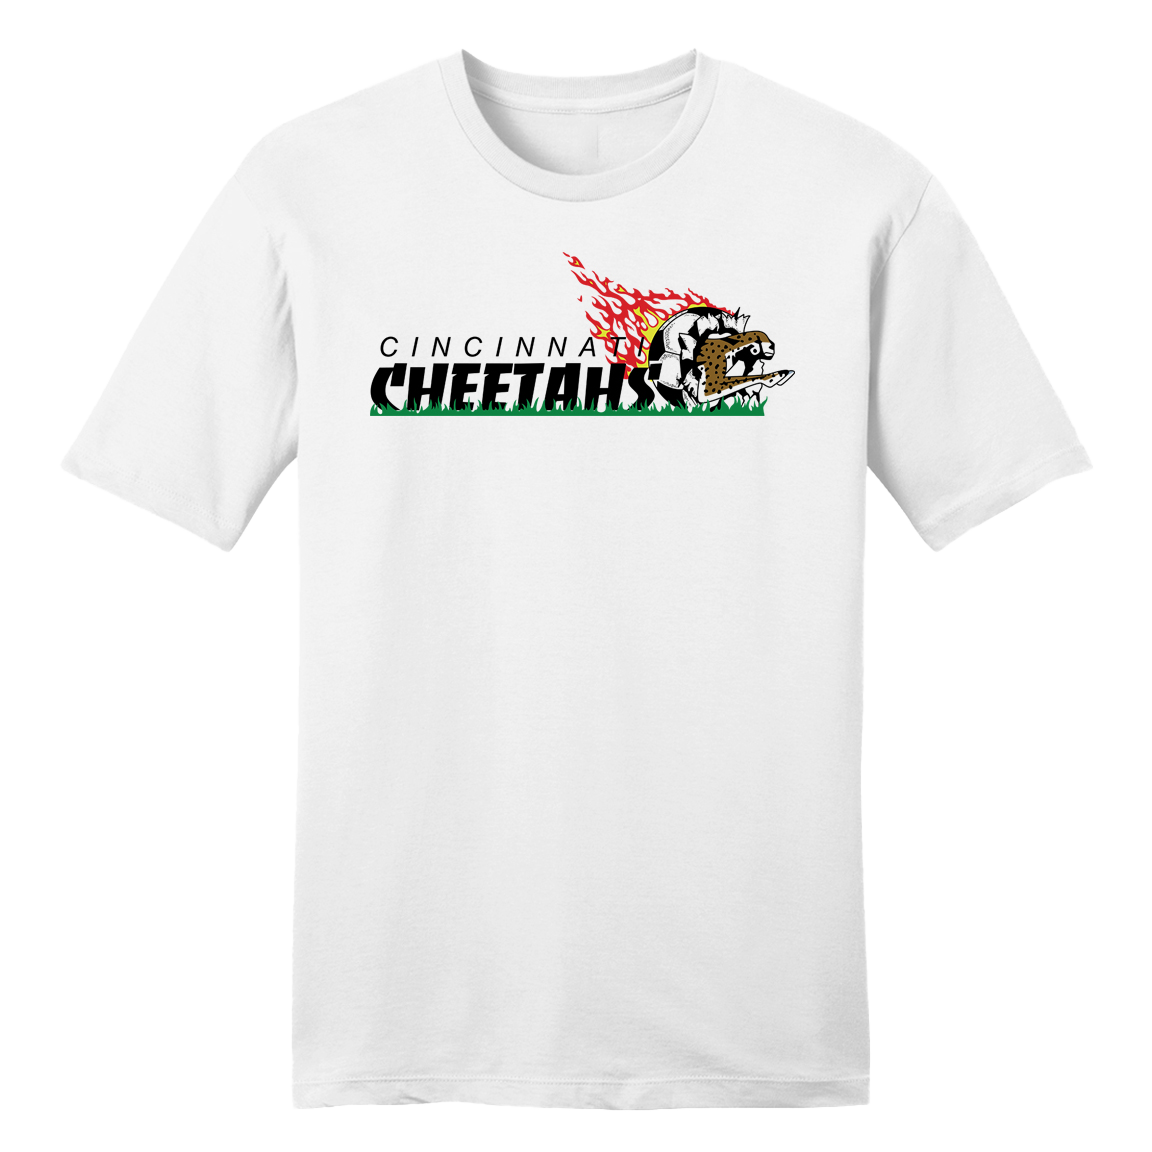 Cincinnati Cheetahs Soccer t-shirt